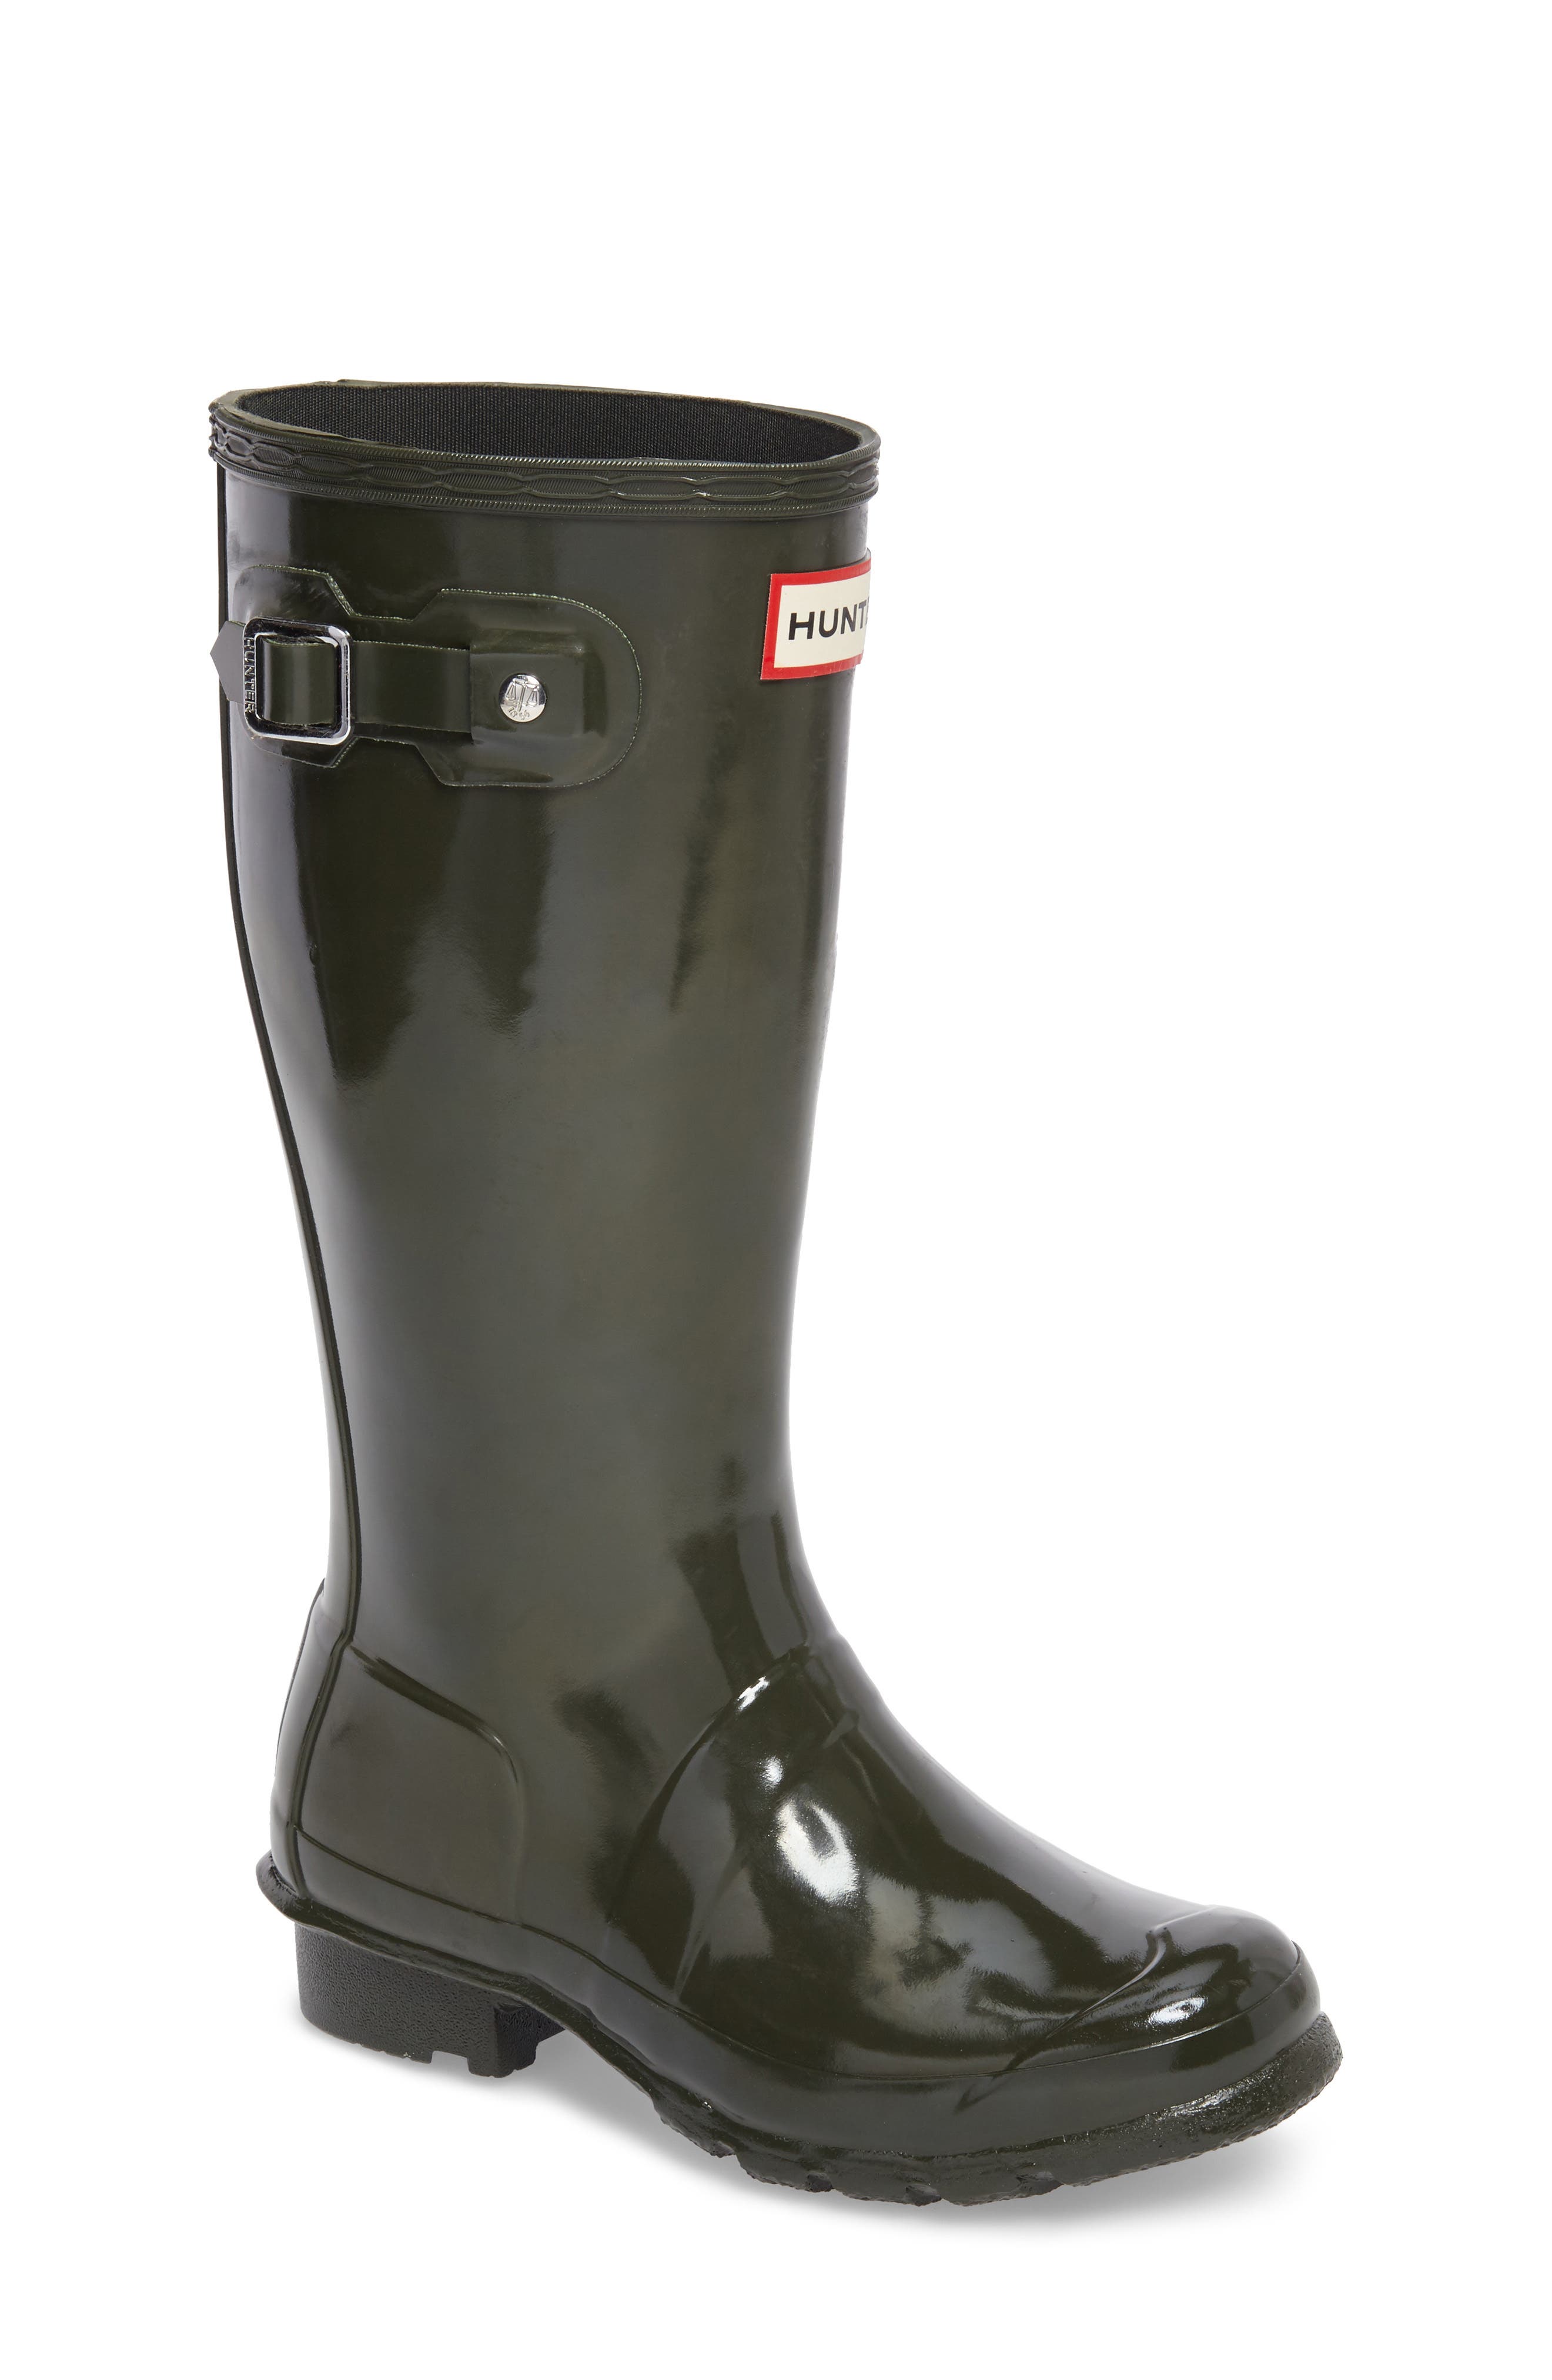 size 2 baby rain boots